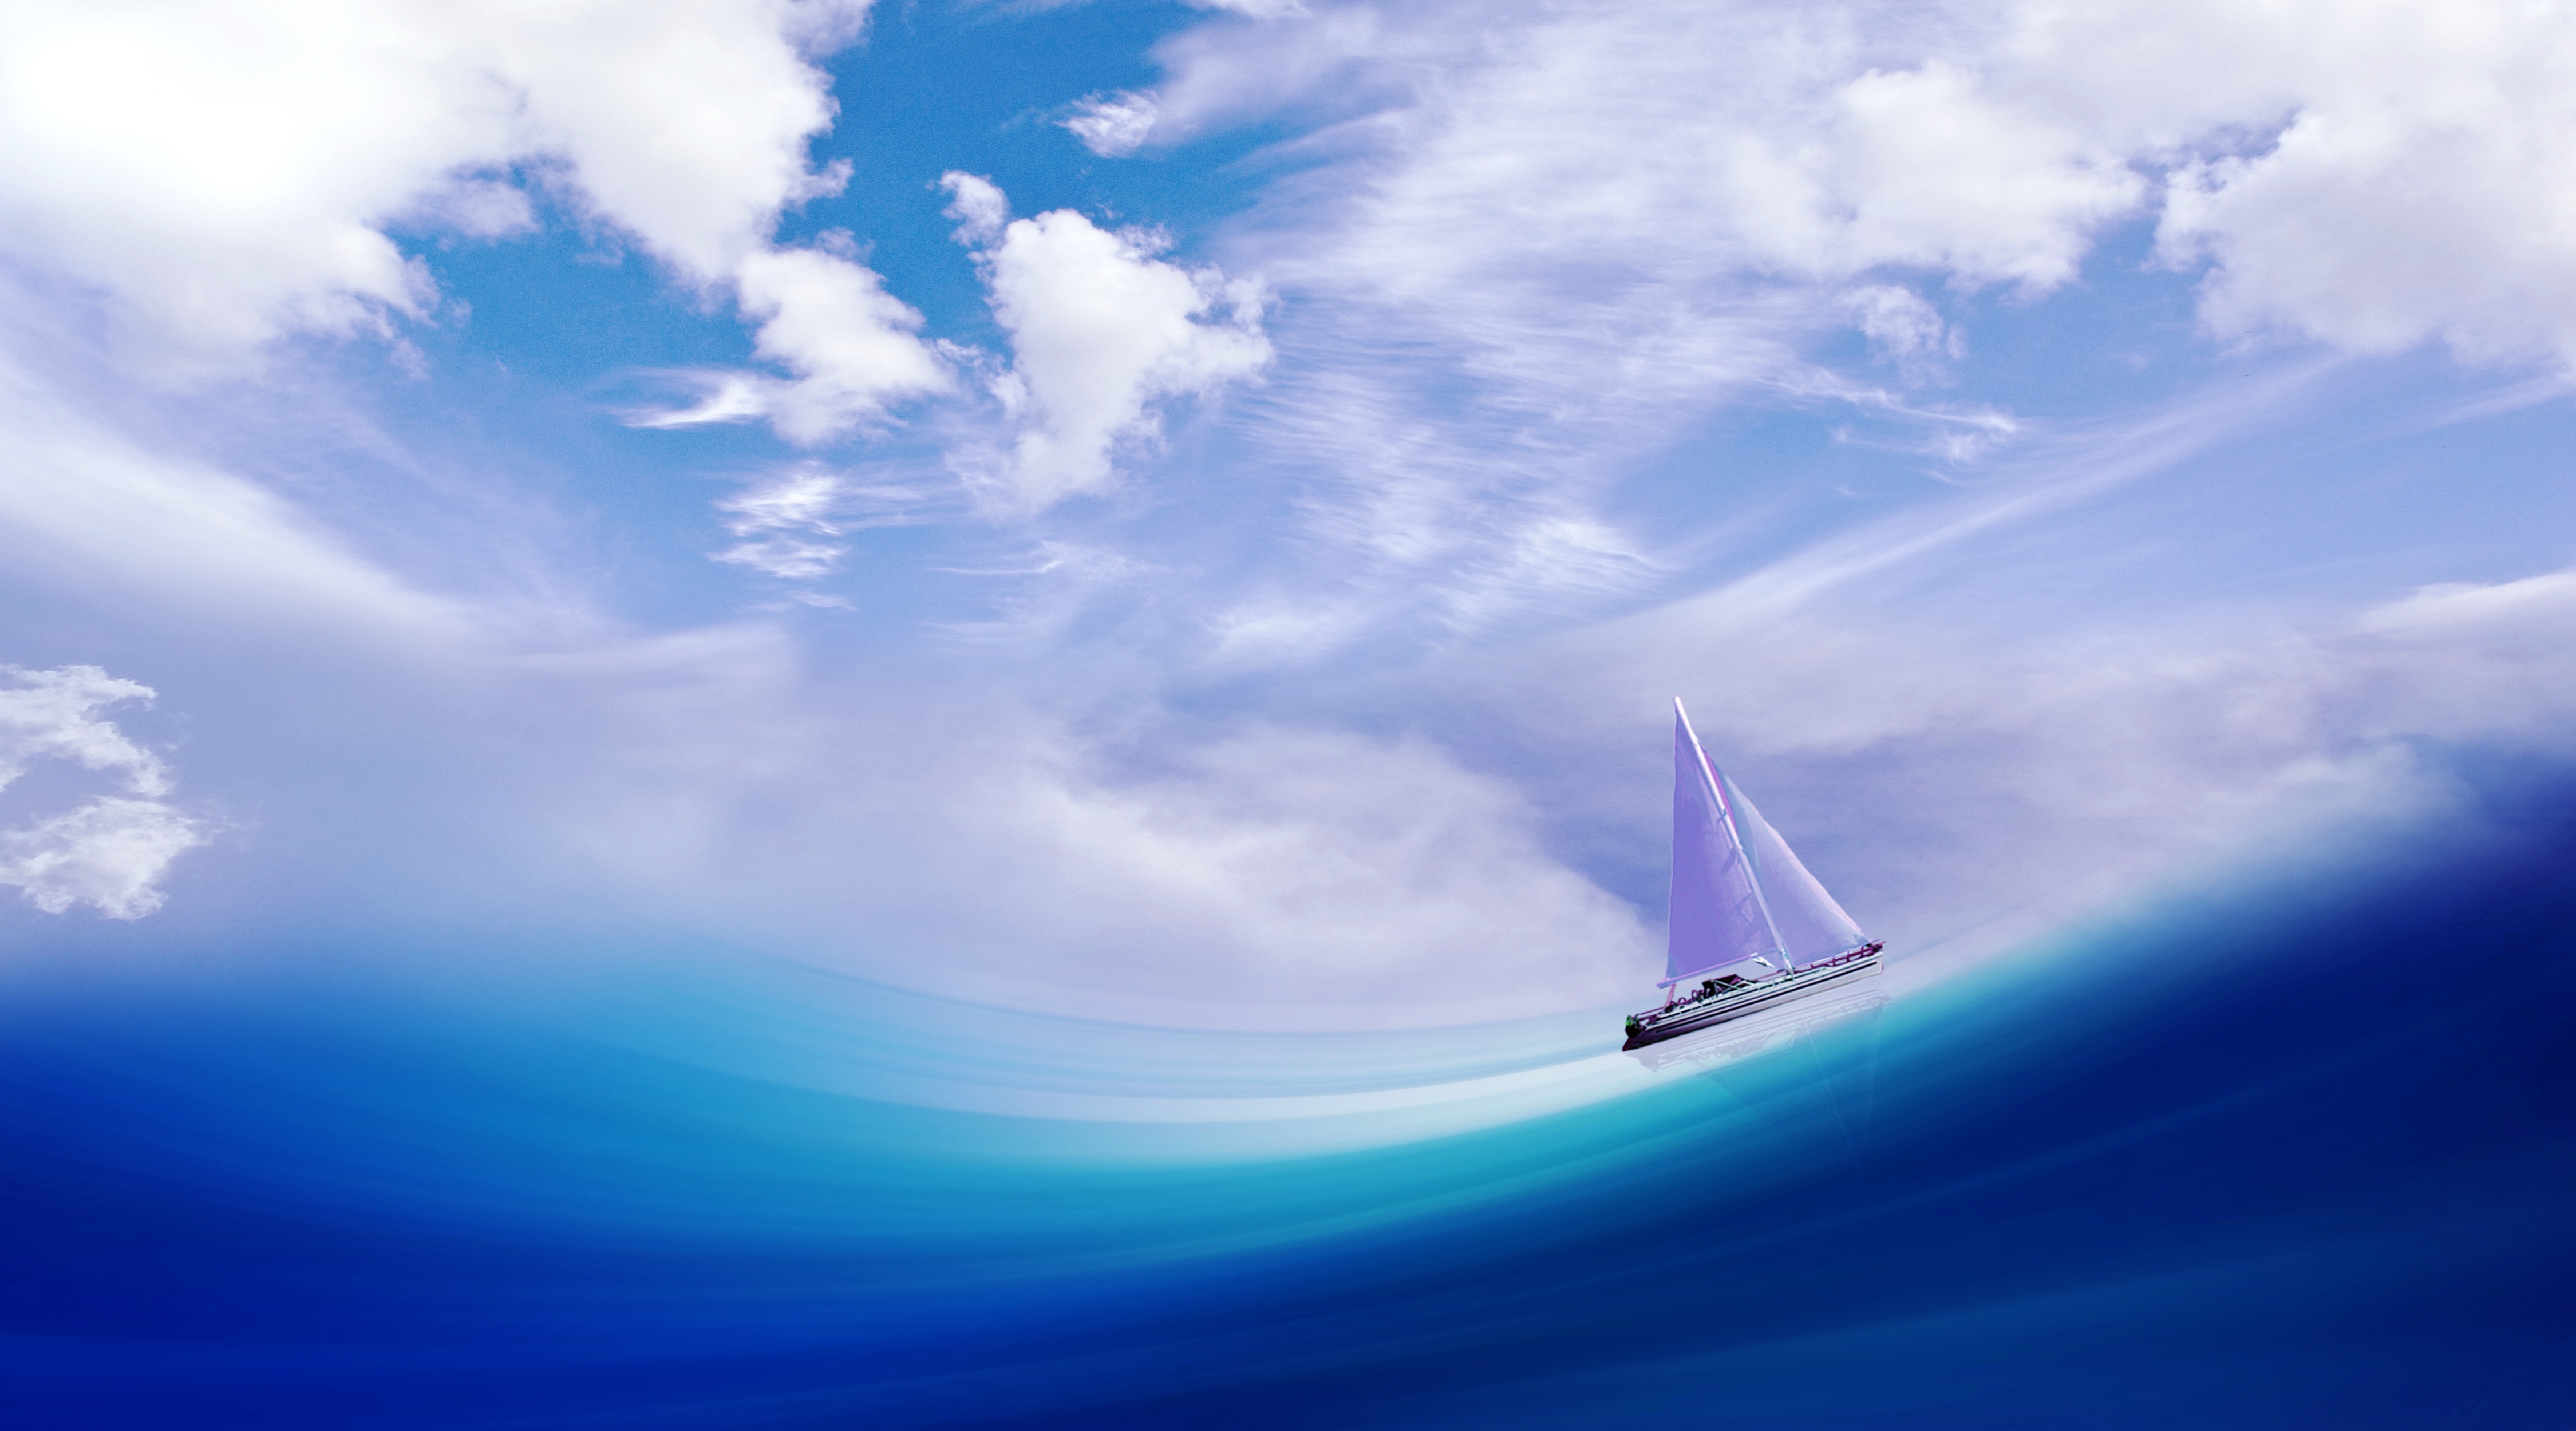 A sailboat sails the waves